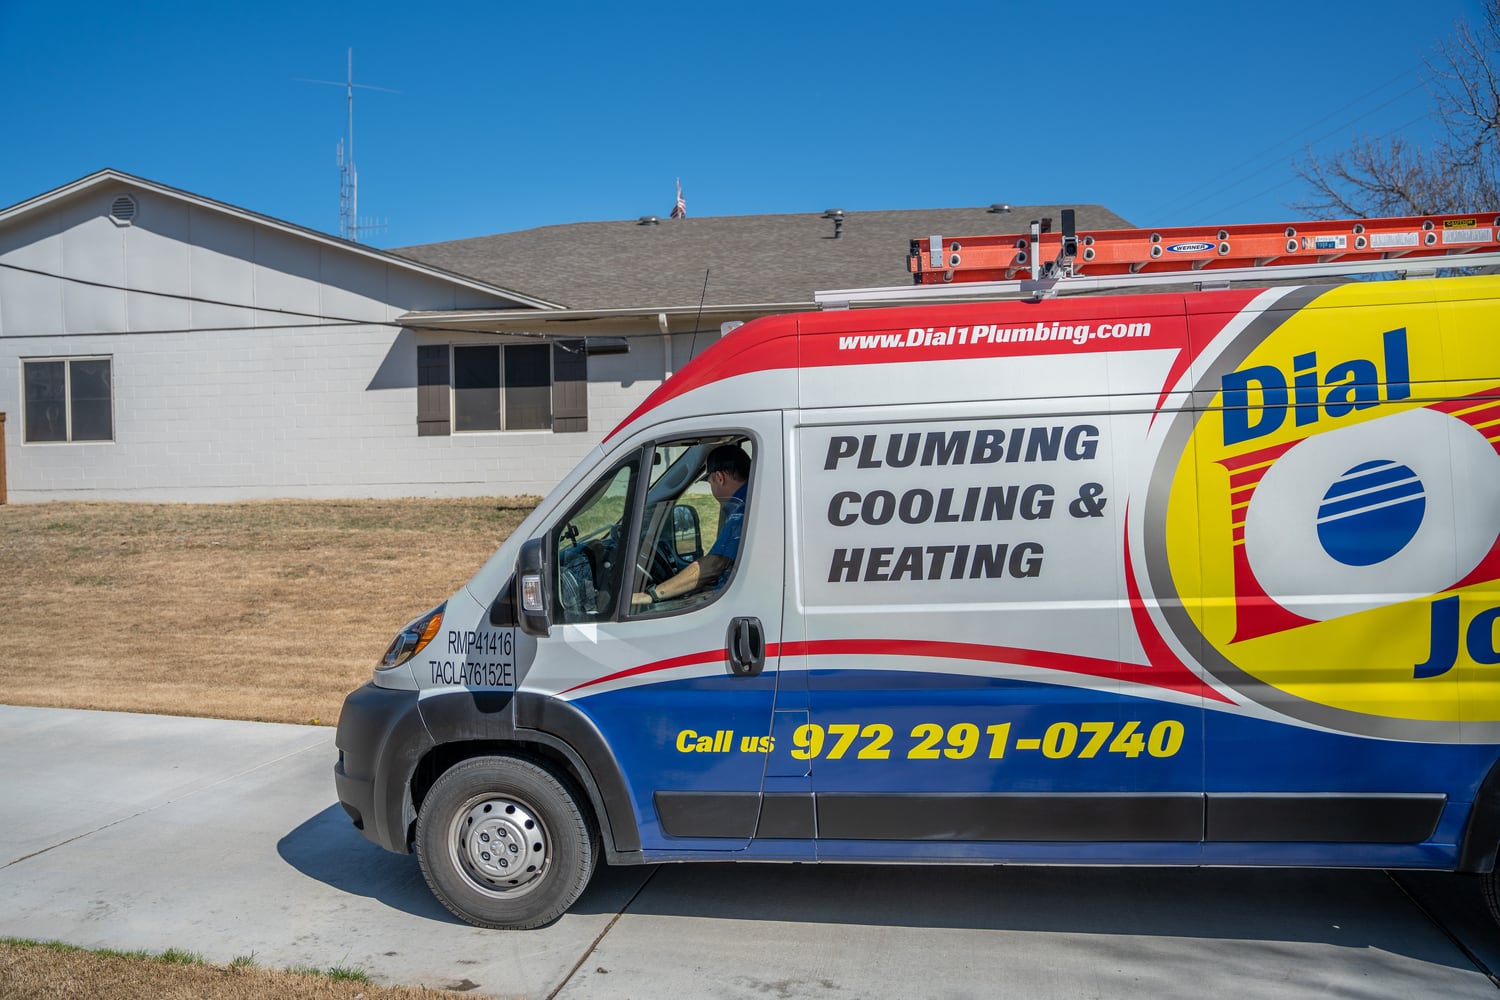 Dial One Johnson Plumbing, Cooling & Heating - Dallas, TX, US, plumber